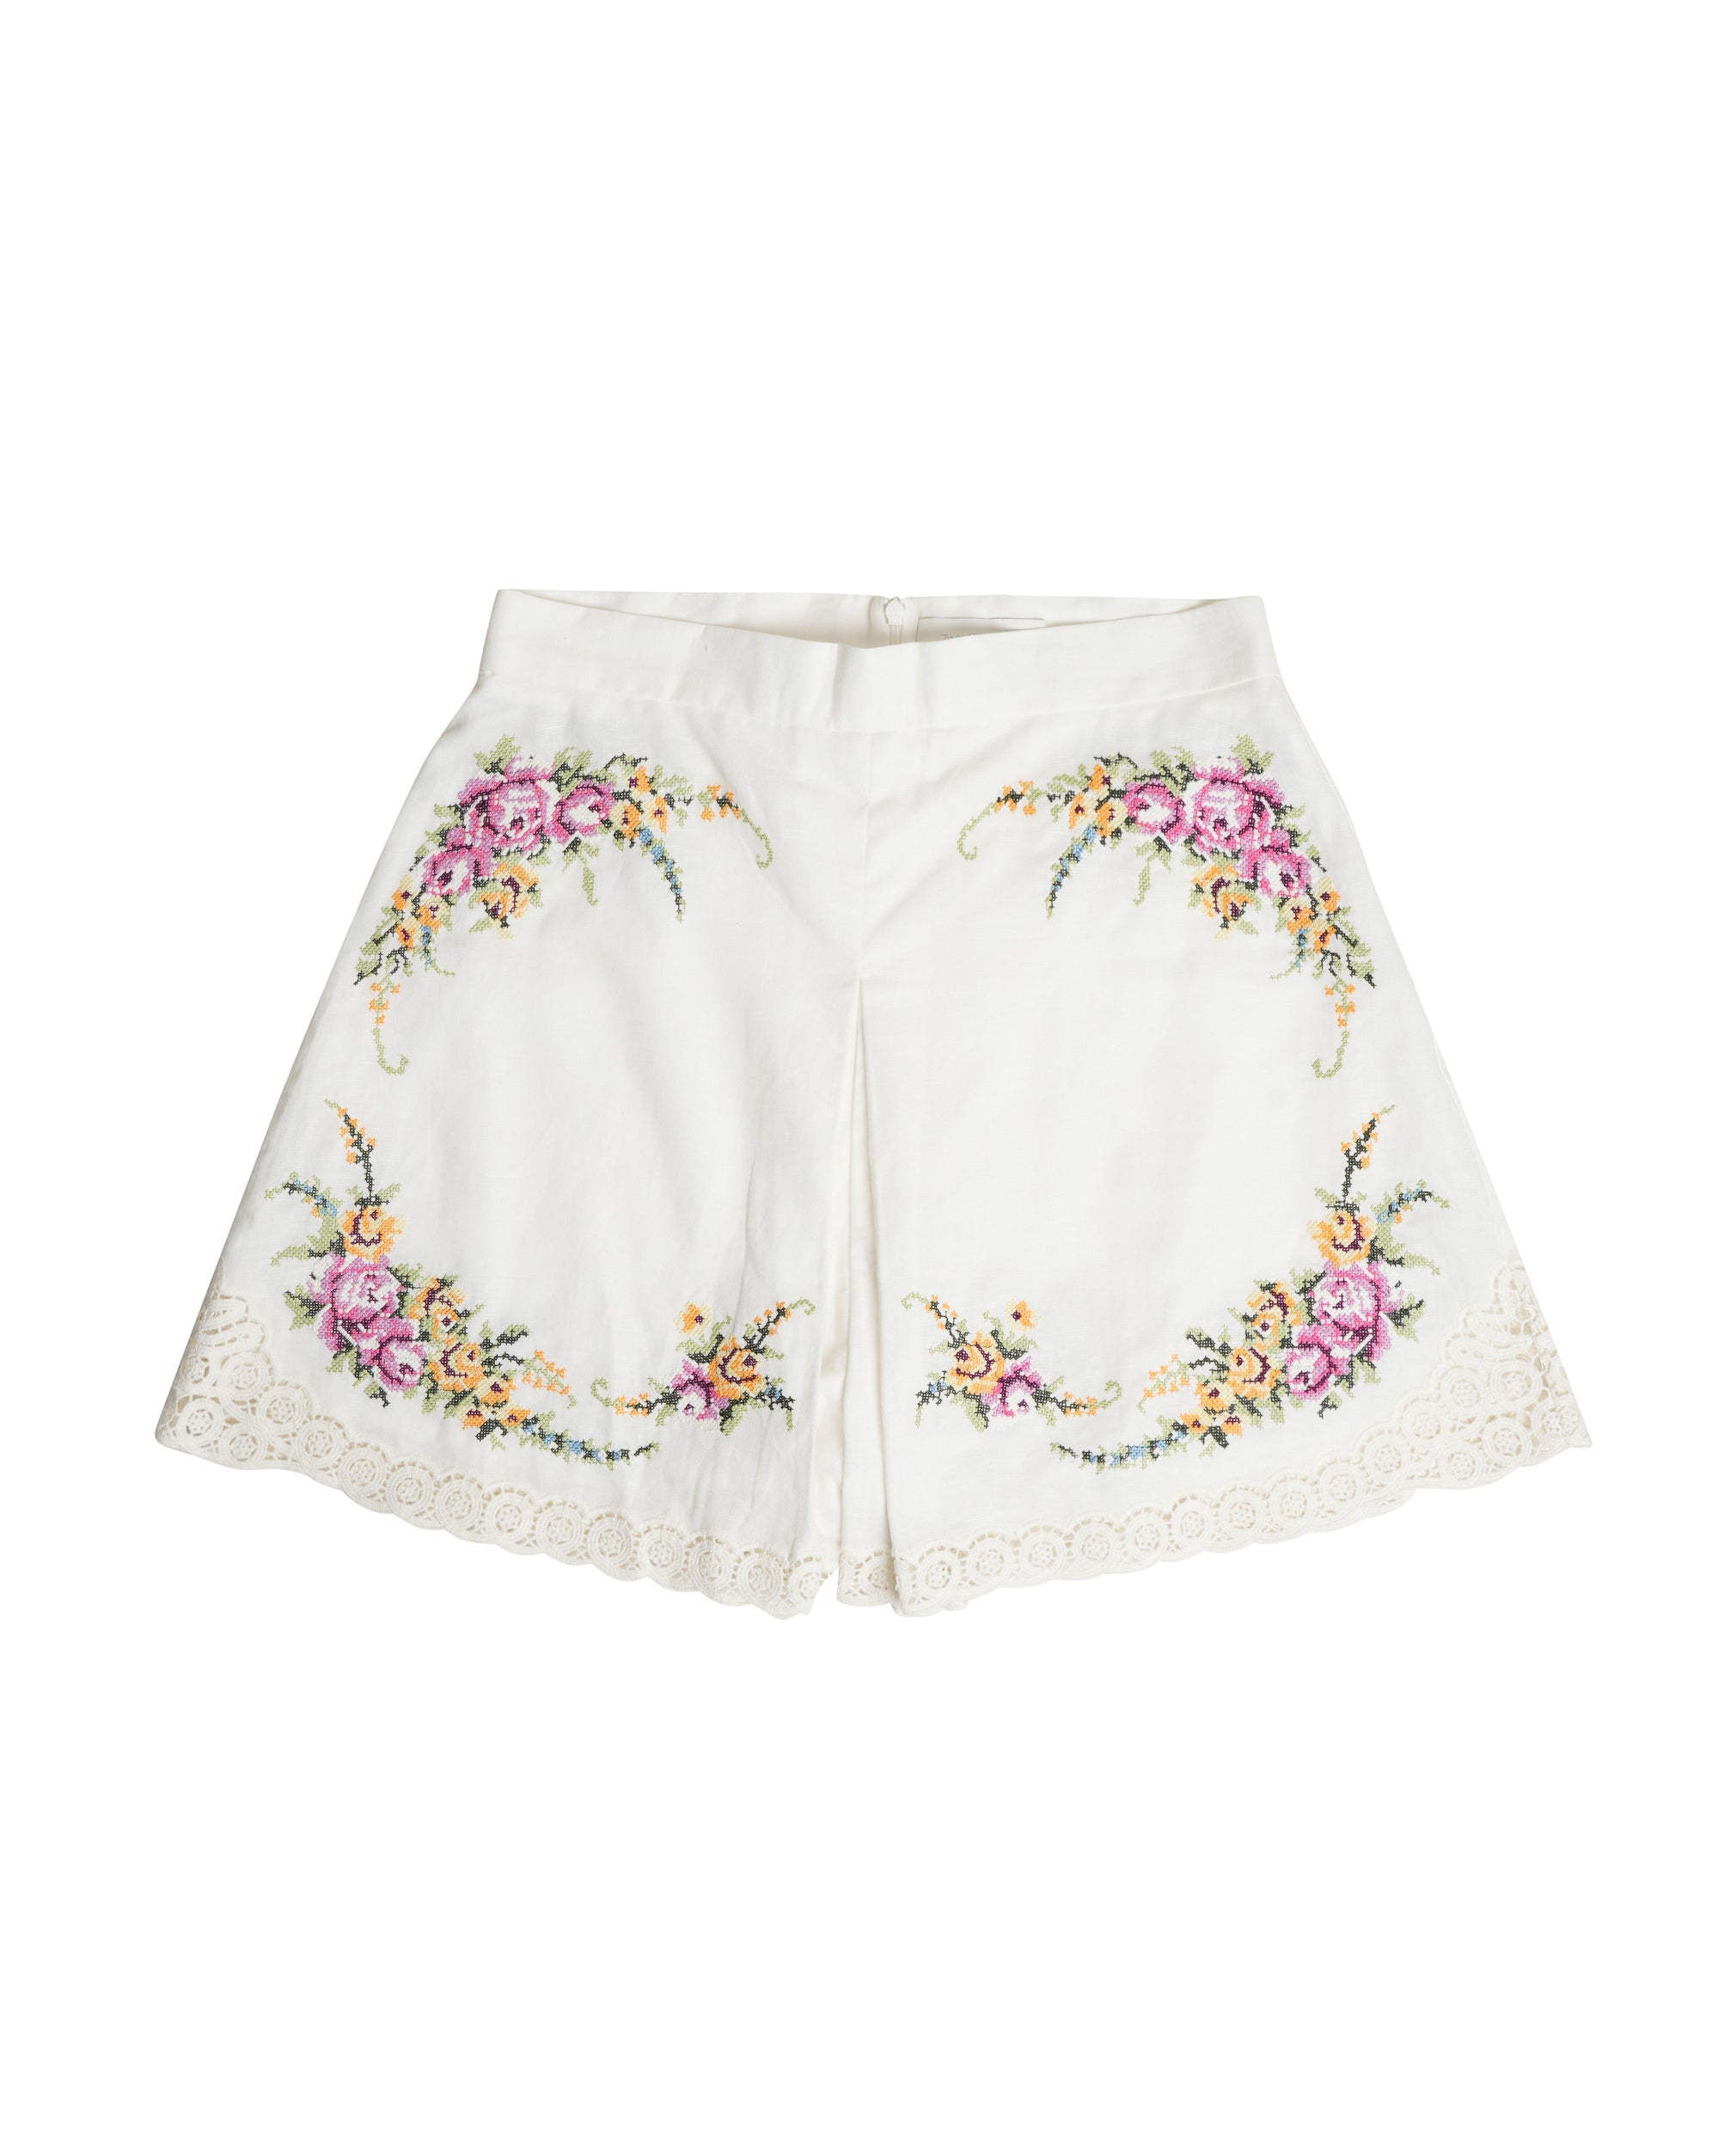 Zimmerman Cross Stitch Embroidered White Shorts